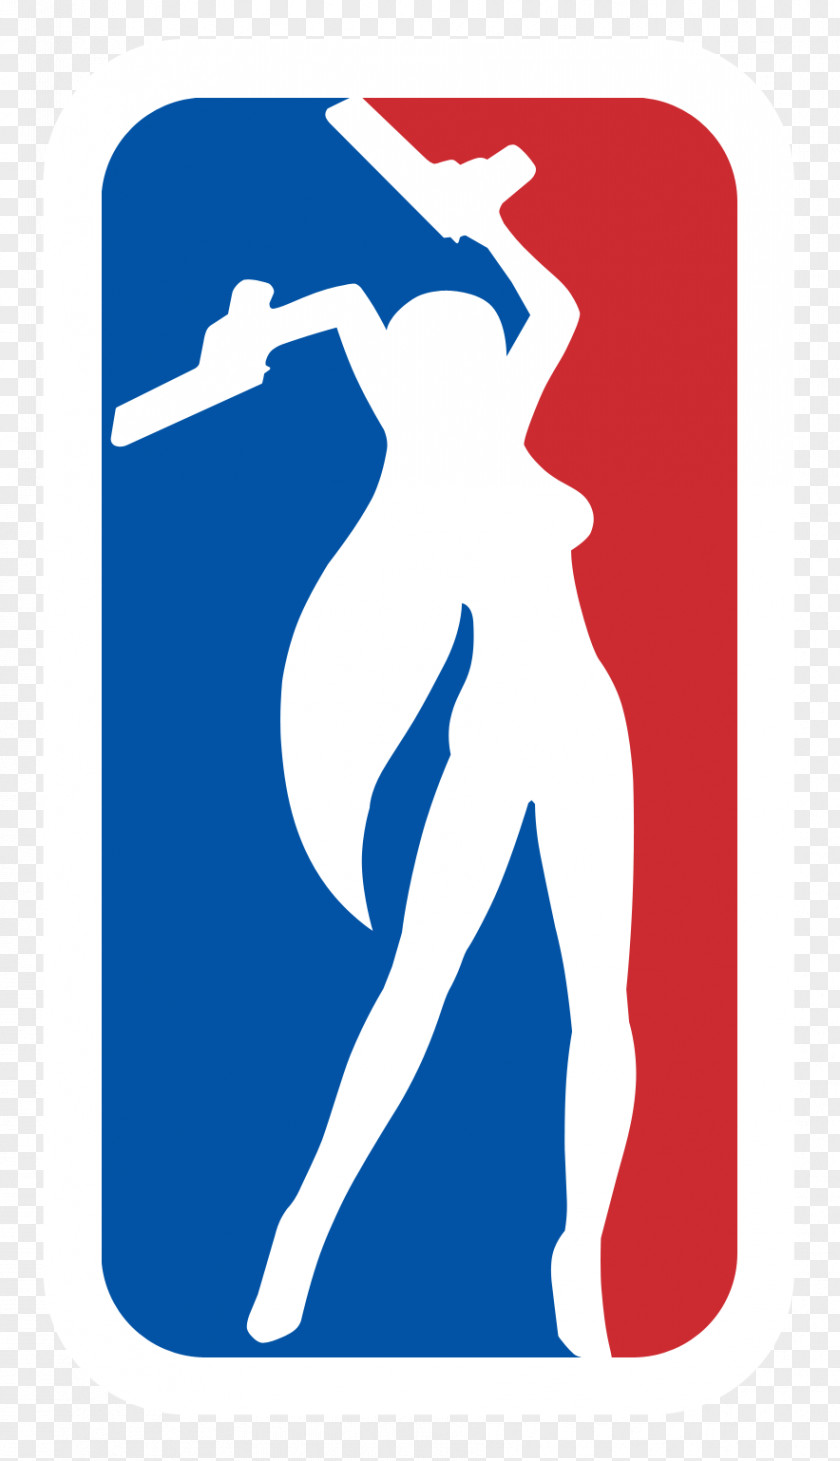 Nba NBA 2K13 Cleveland Cavaliers Basketball Logo PNG